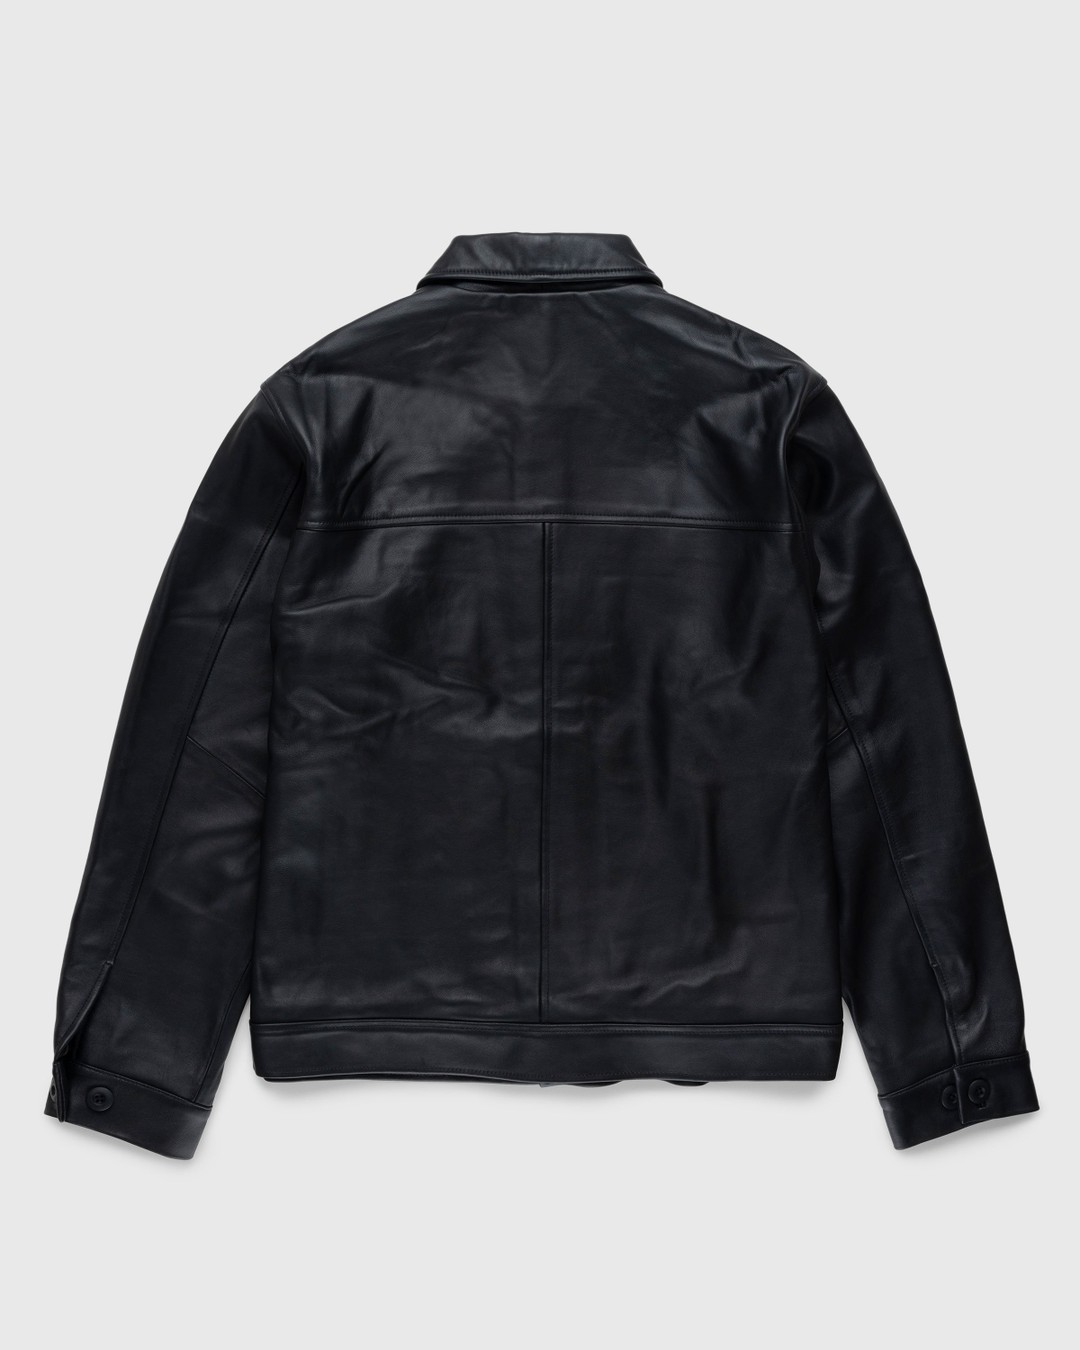 Highsnobiety HS05 – Leather Jacket Black - Outerwear - Black - Image 2